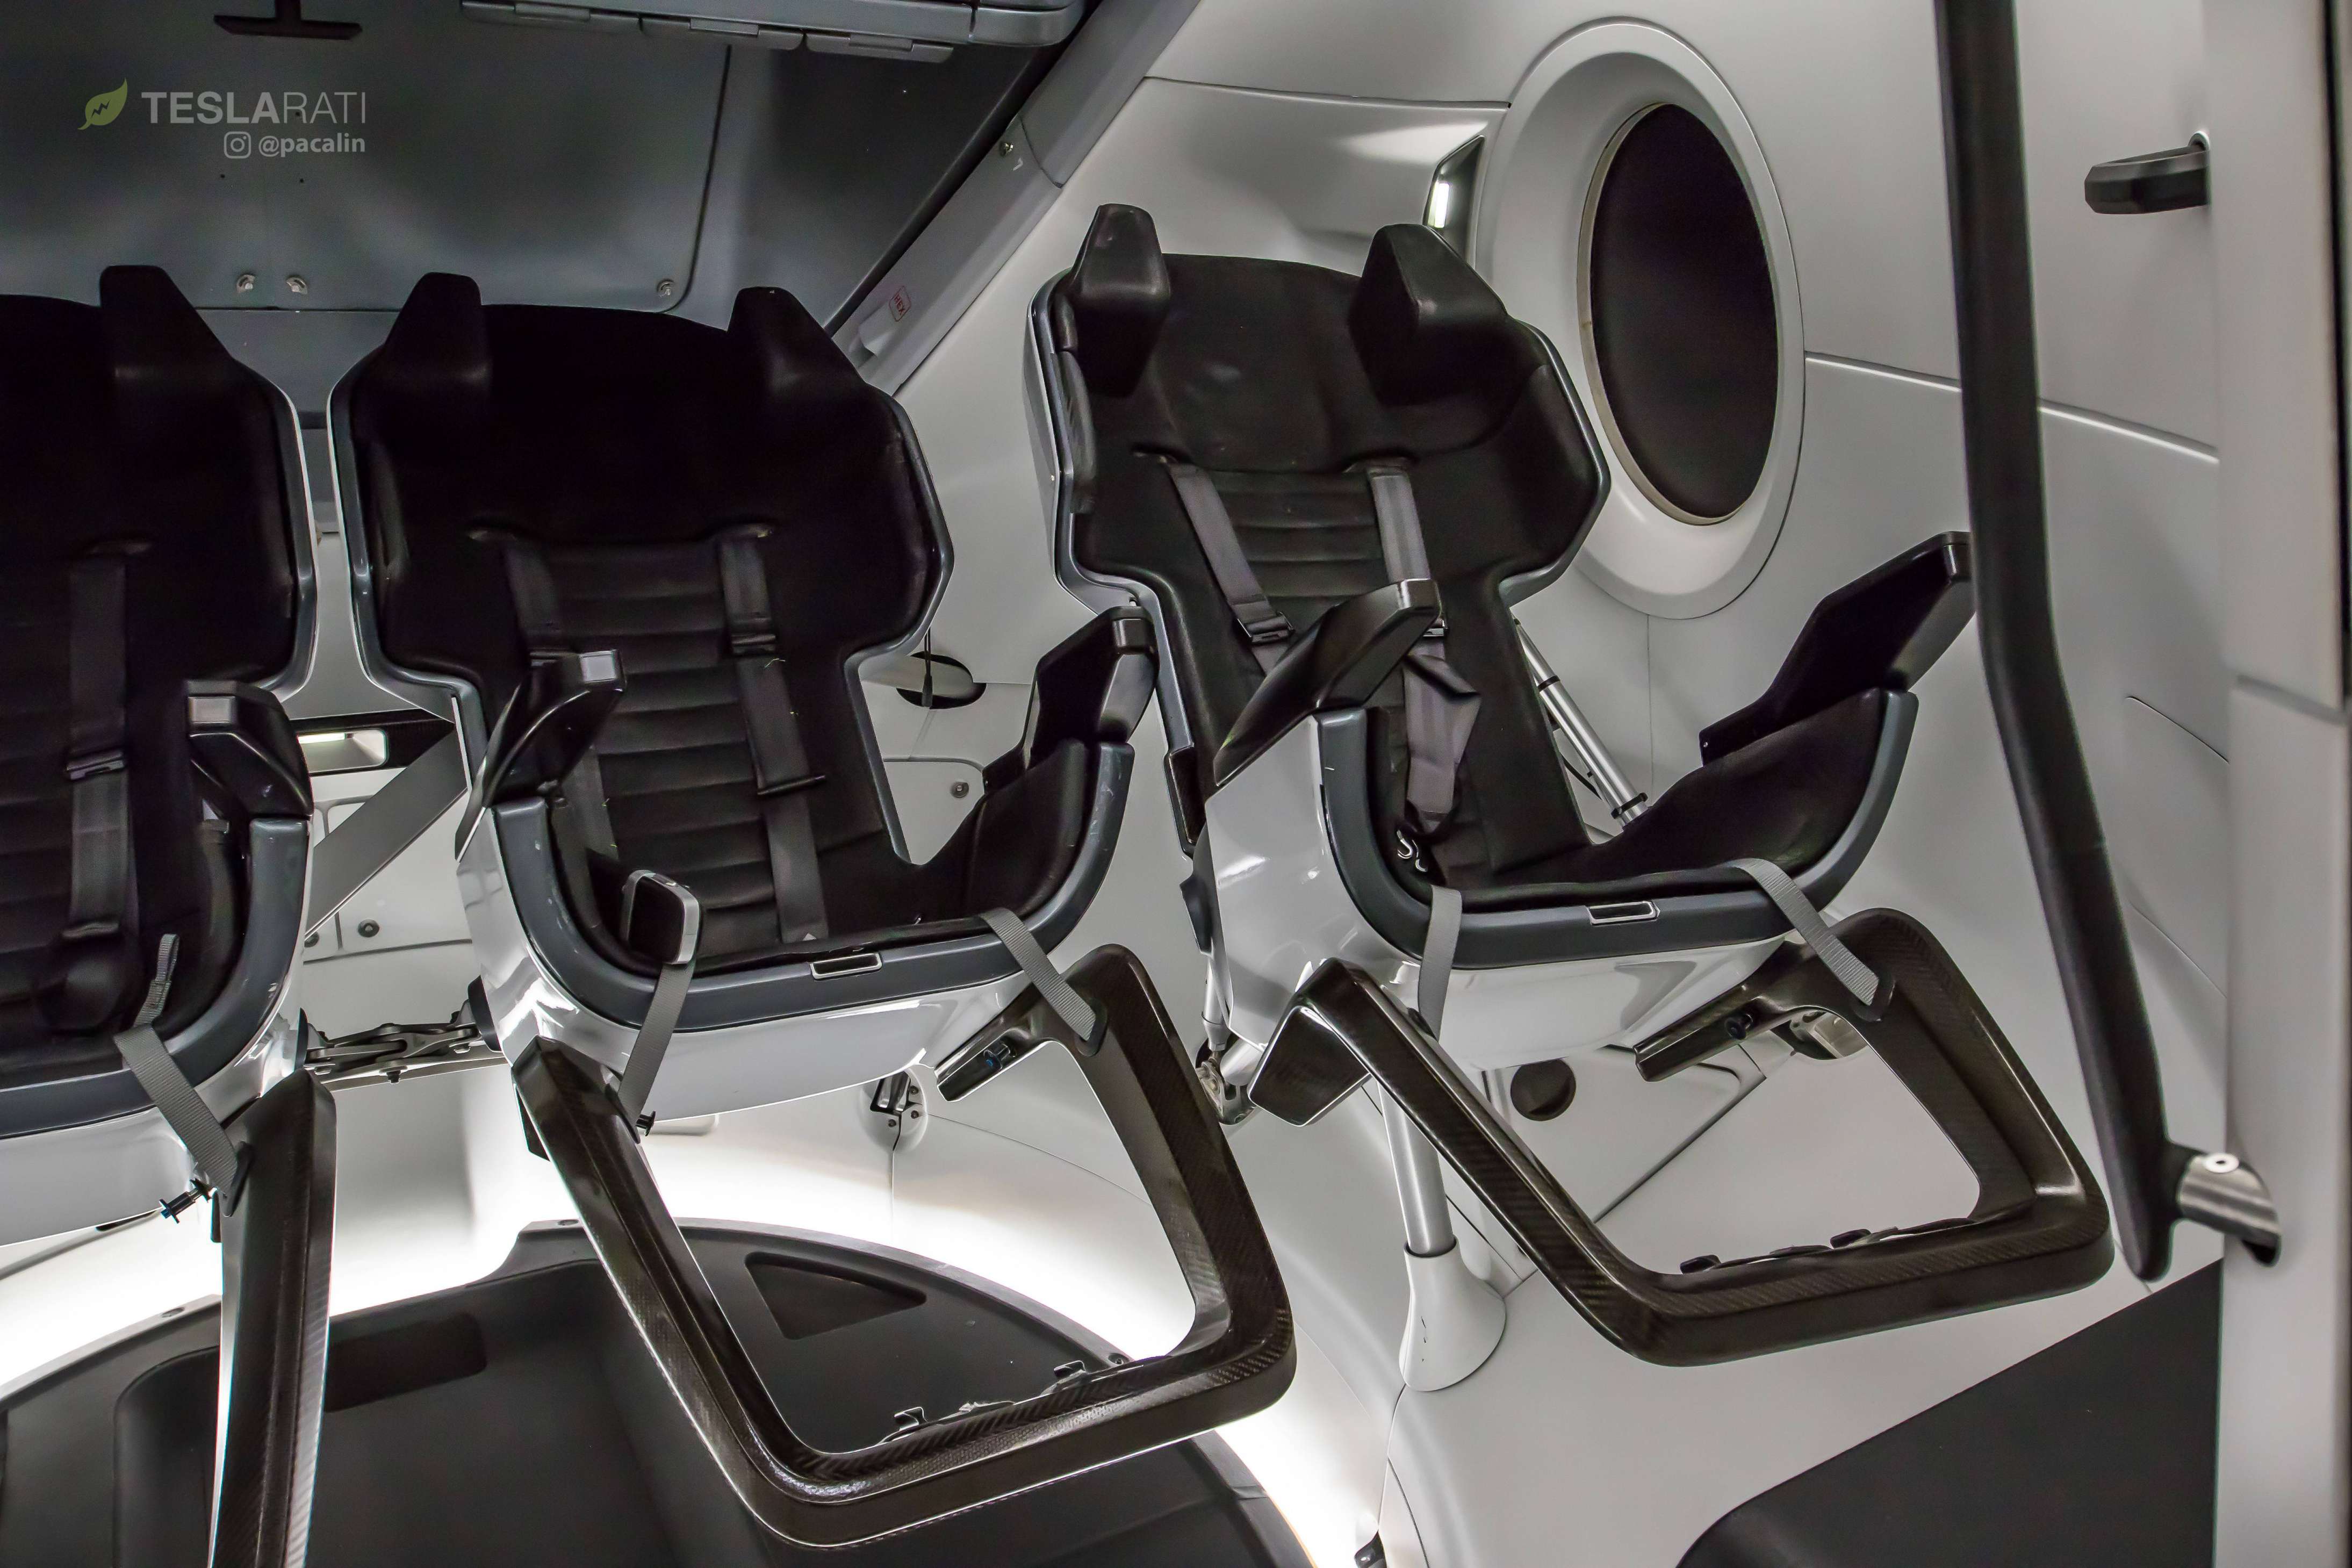 Crew Dragon simulator cabin 081318 (SpaceX) 7 (c)